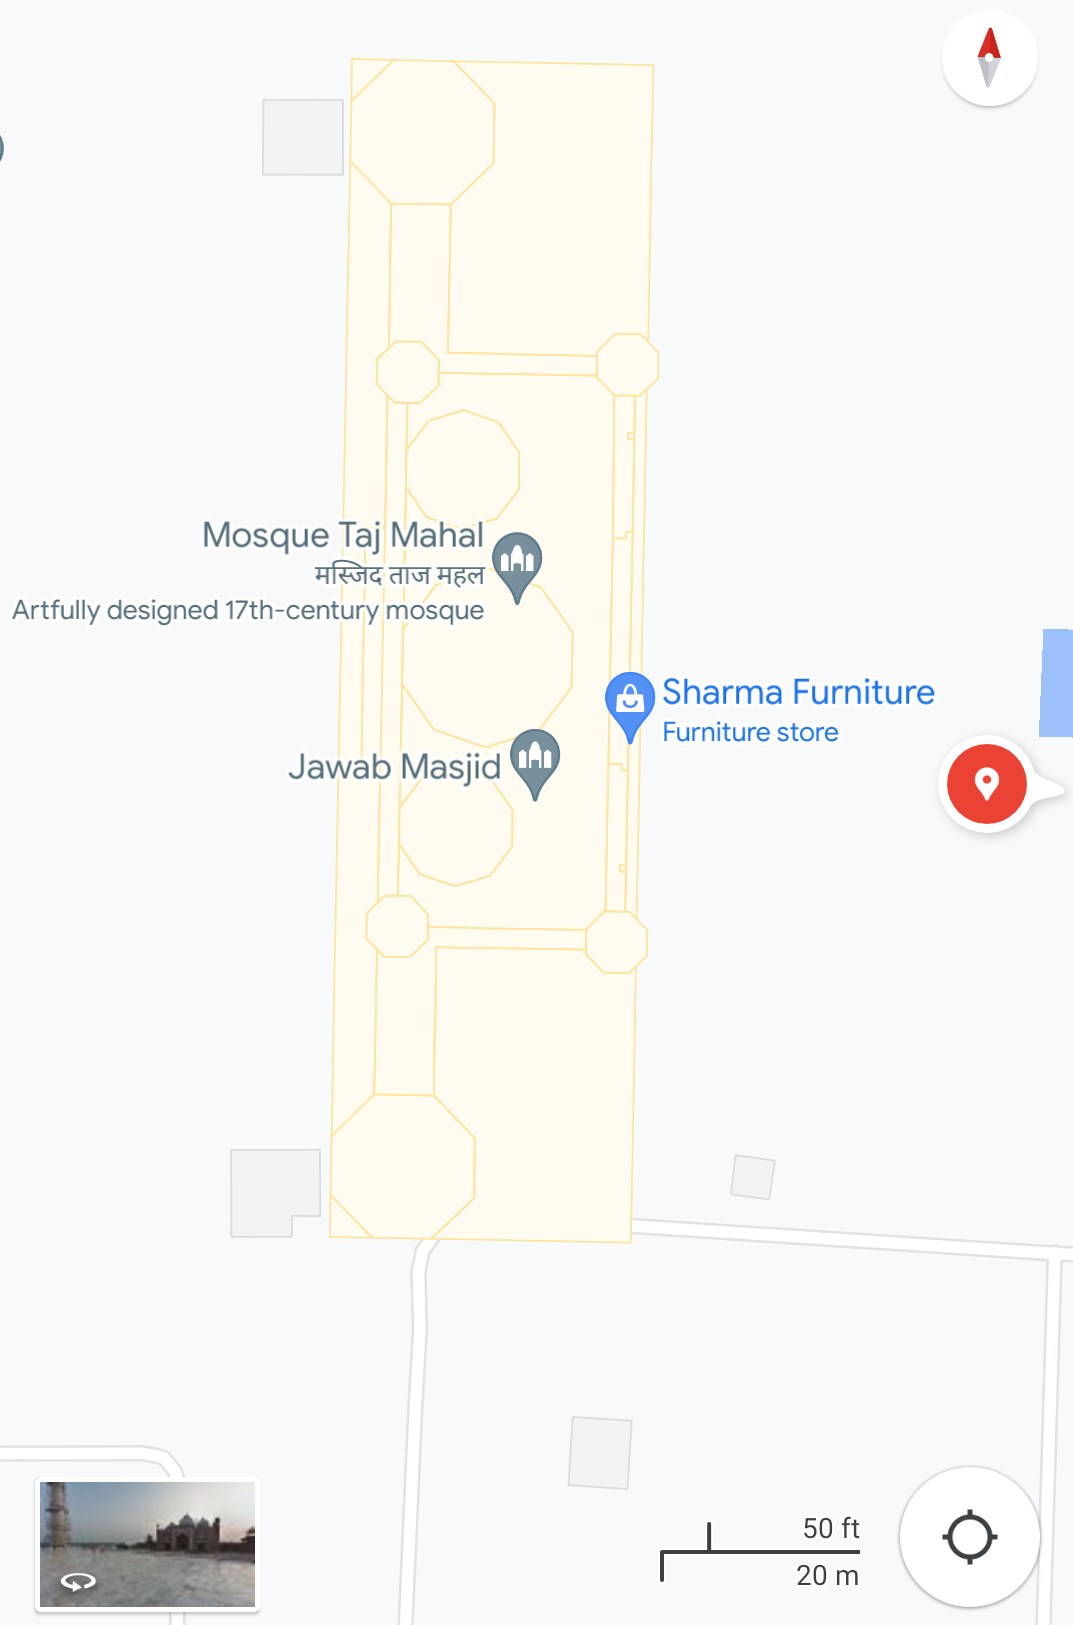 Spam markings of a Furniture shop marked near Taj Mahal in Google Maps